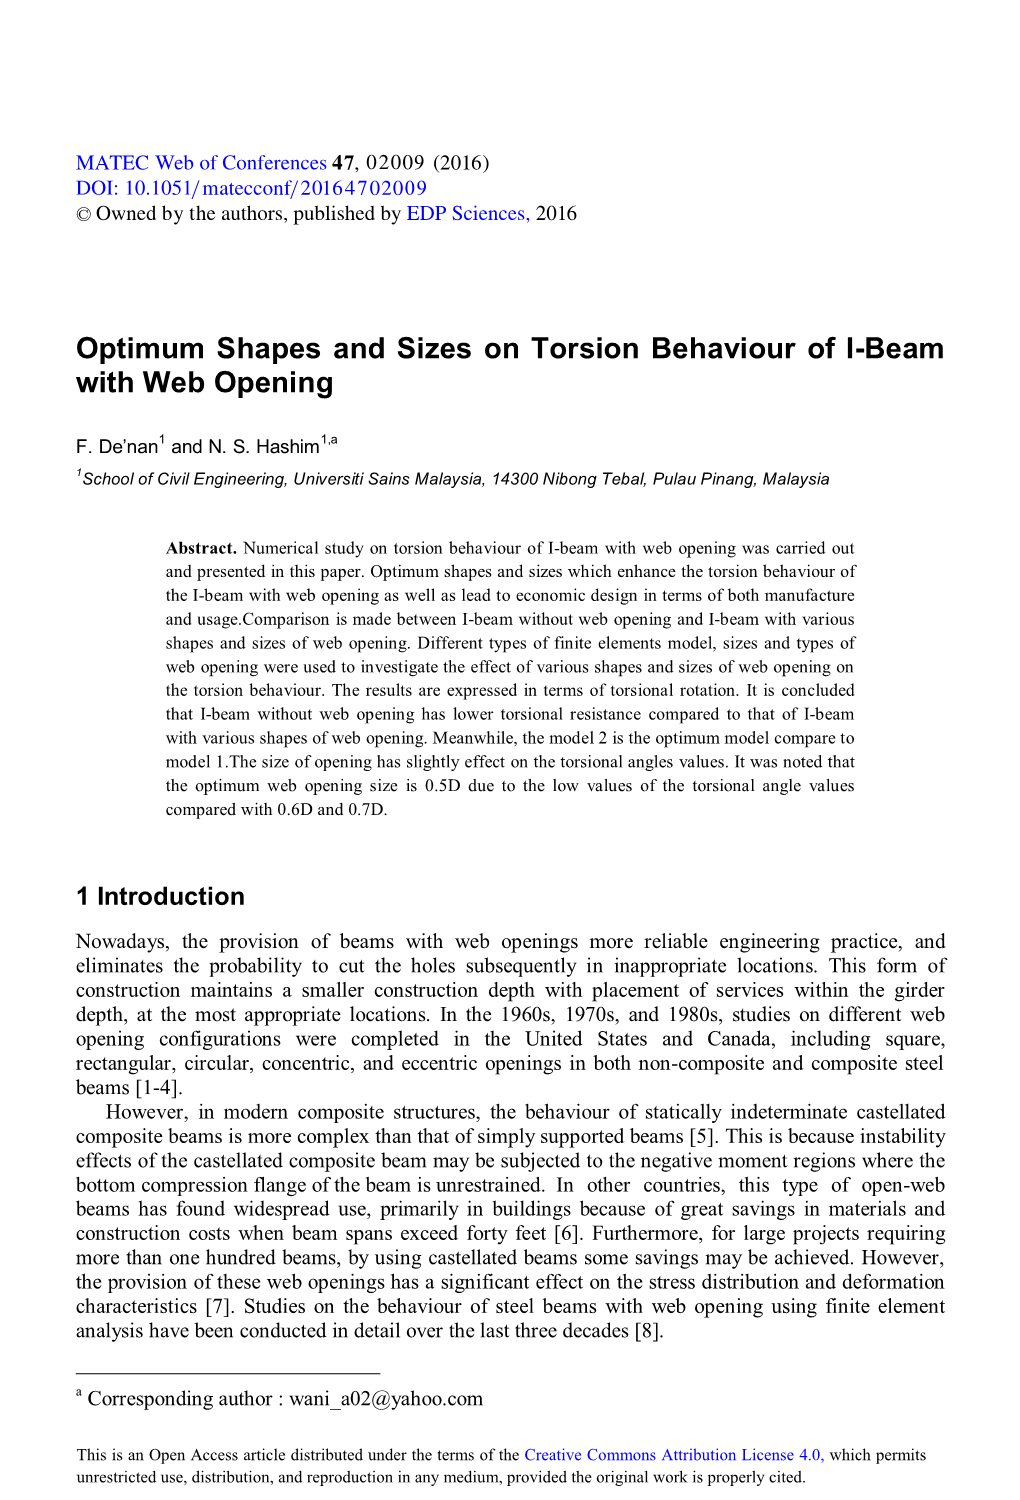 Optimum Shapes and Sizes on Torsion Behaviour of I-Beam with Web Opening